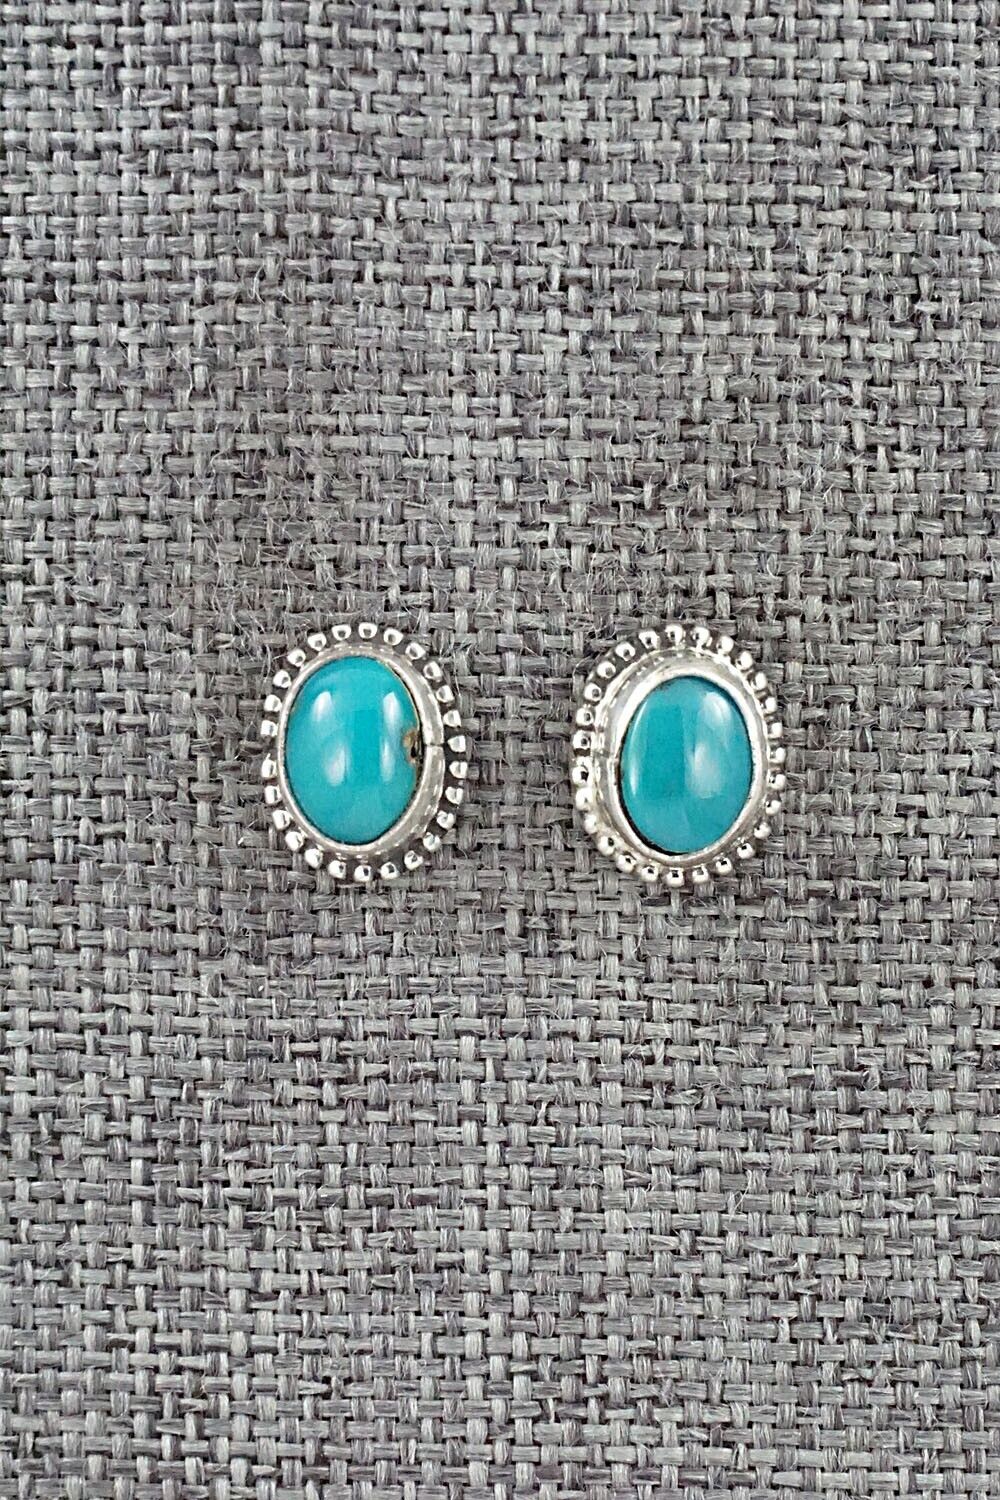 Turquoise & Sterling Silver Earrings - Rosemary Saunders